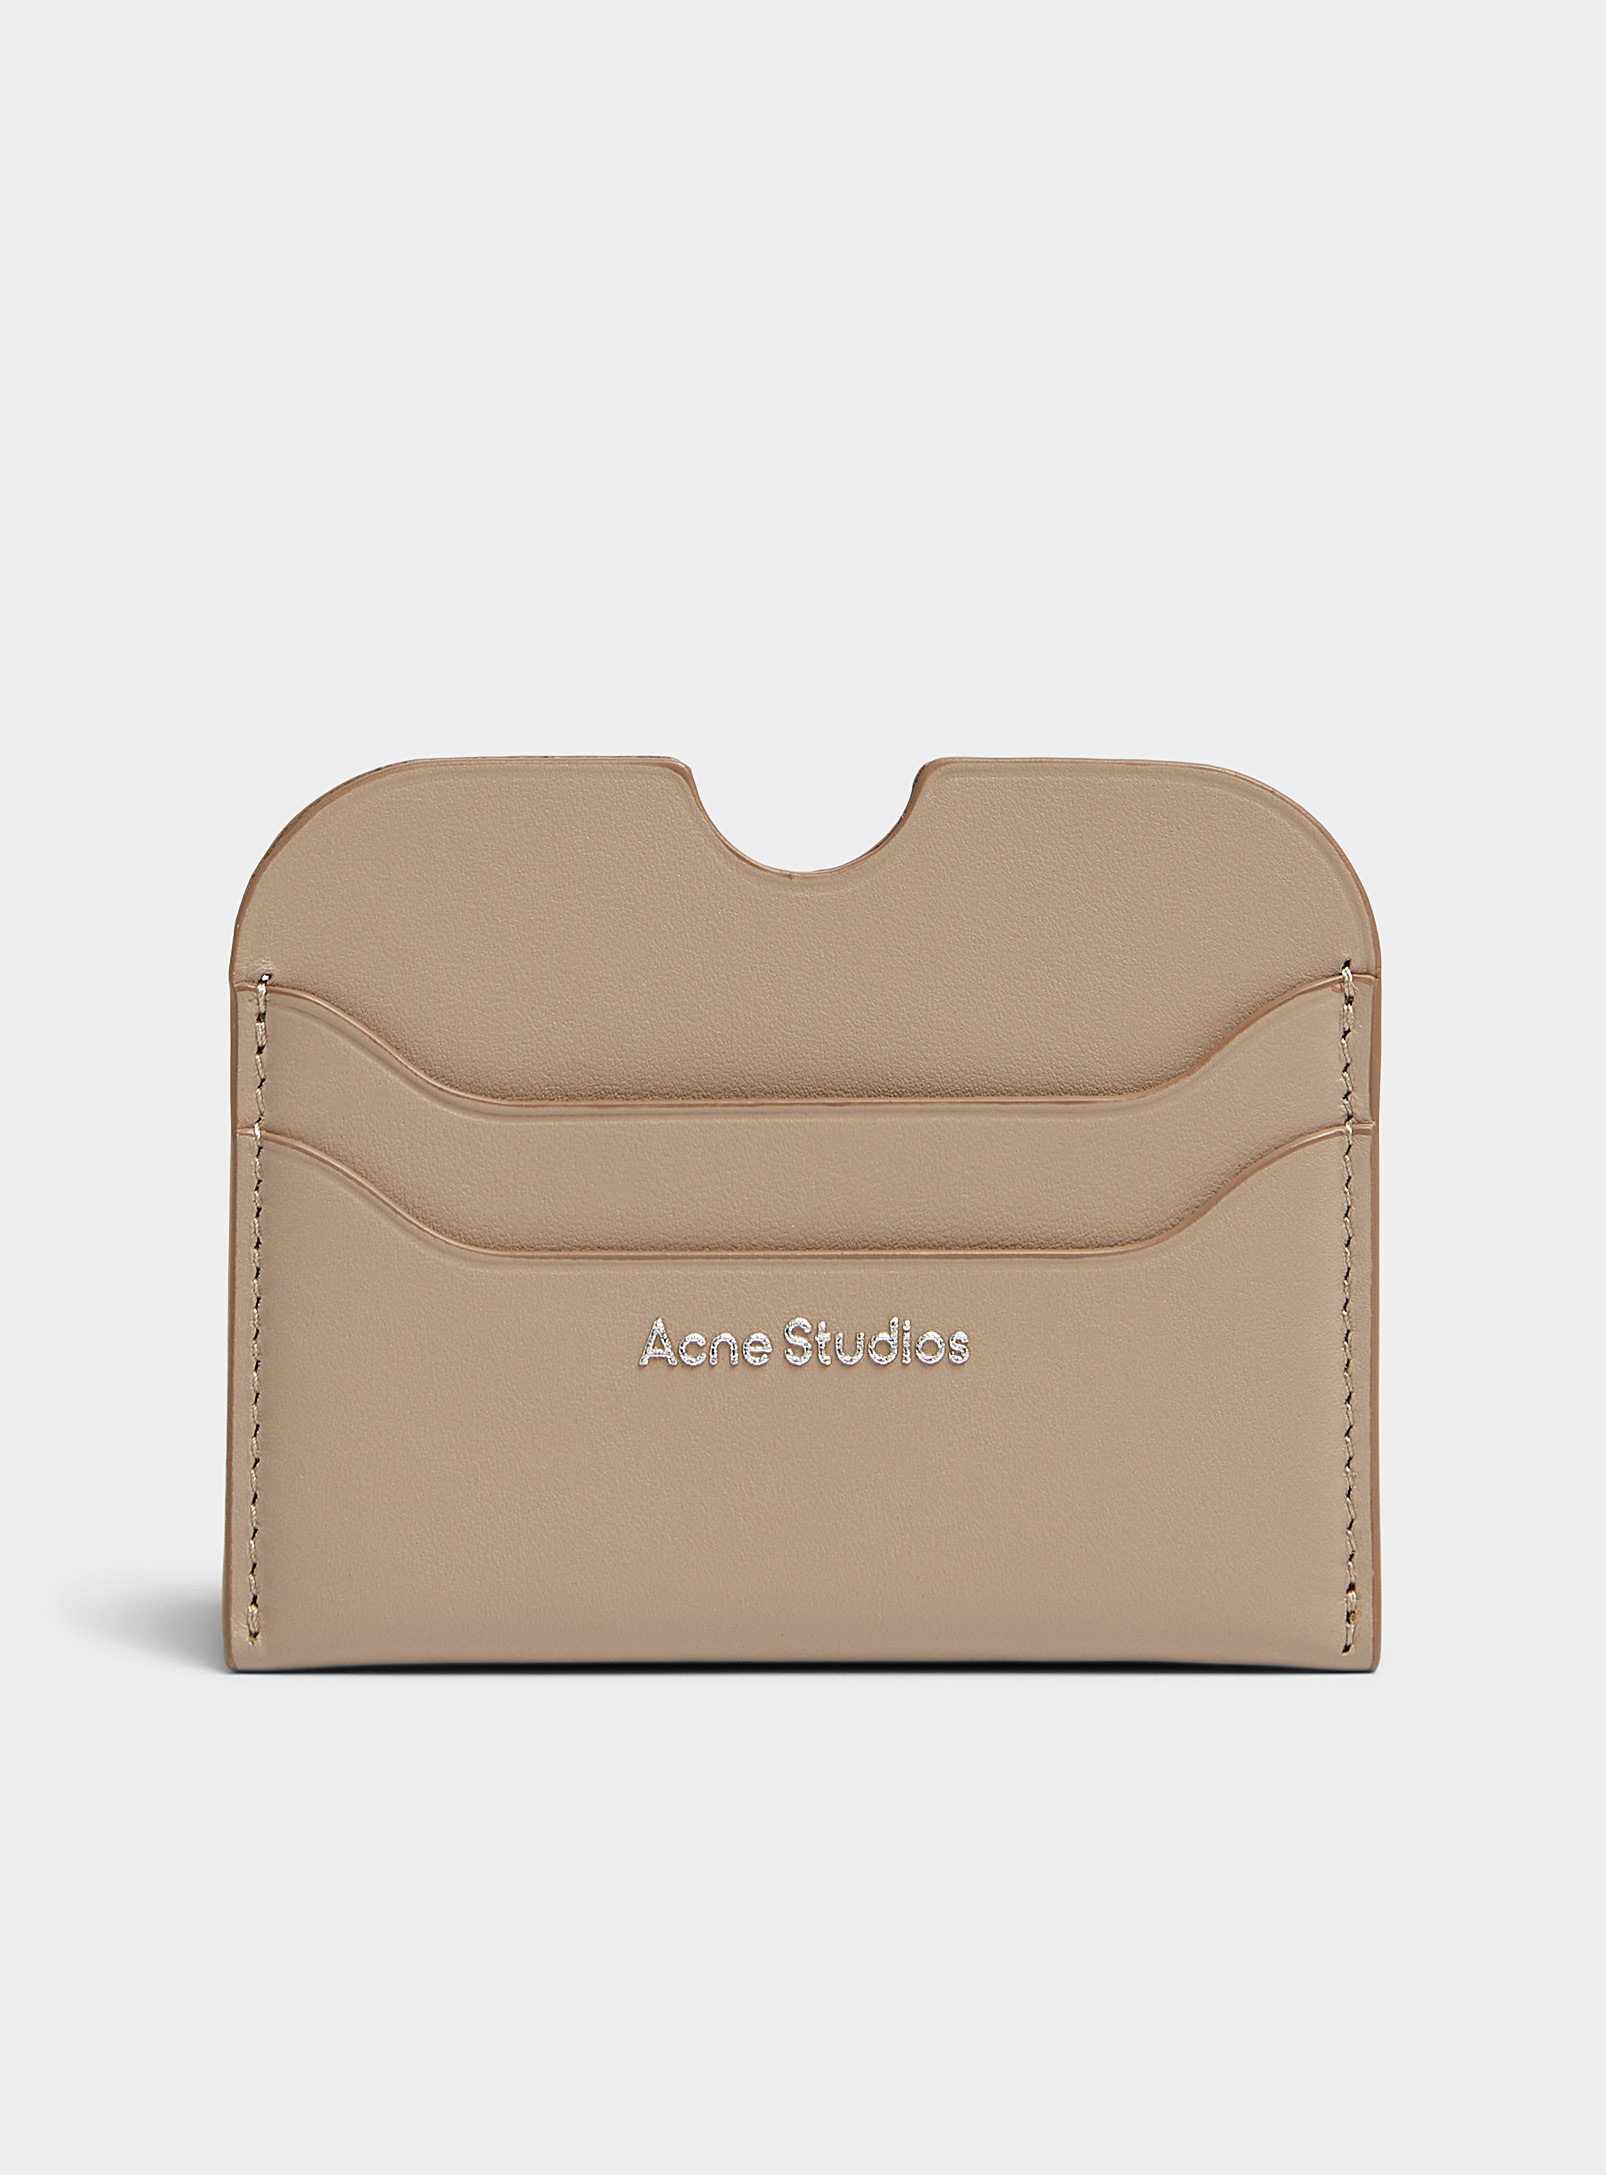 Acne Studios Embossed Signature Plain Leather Card Case In Gray